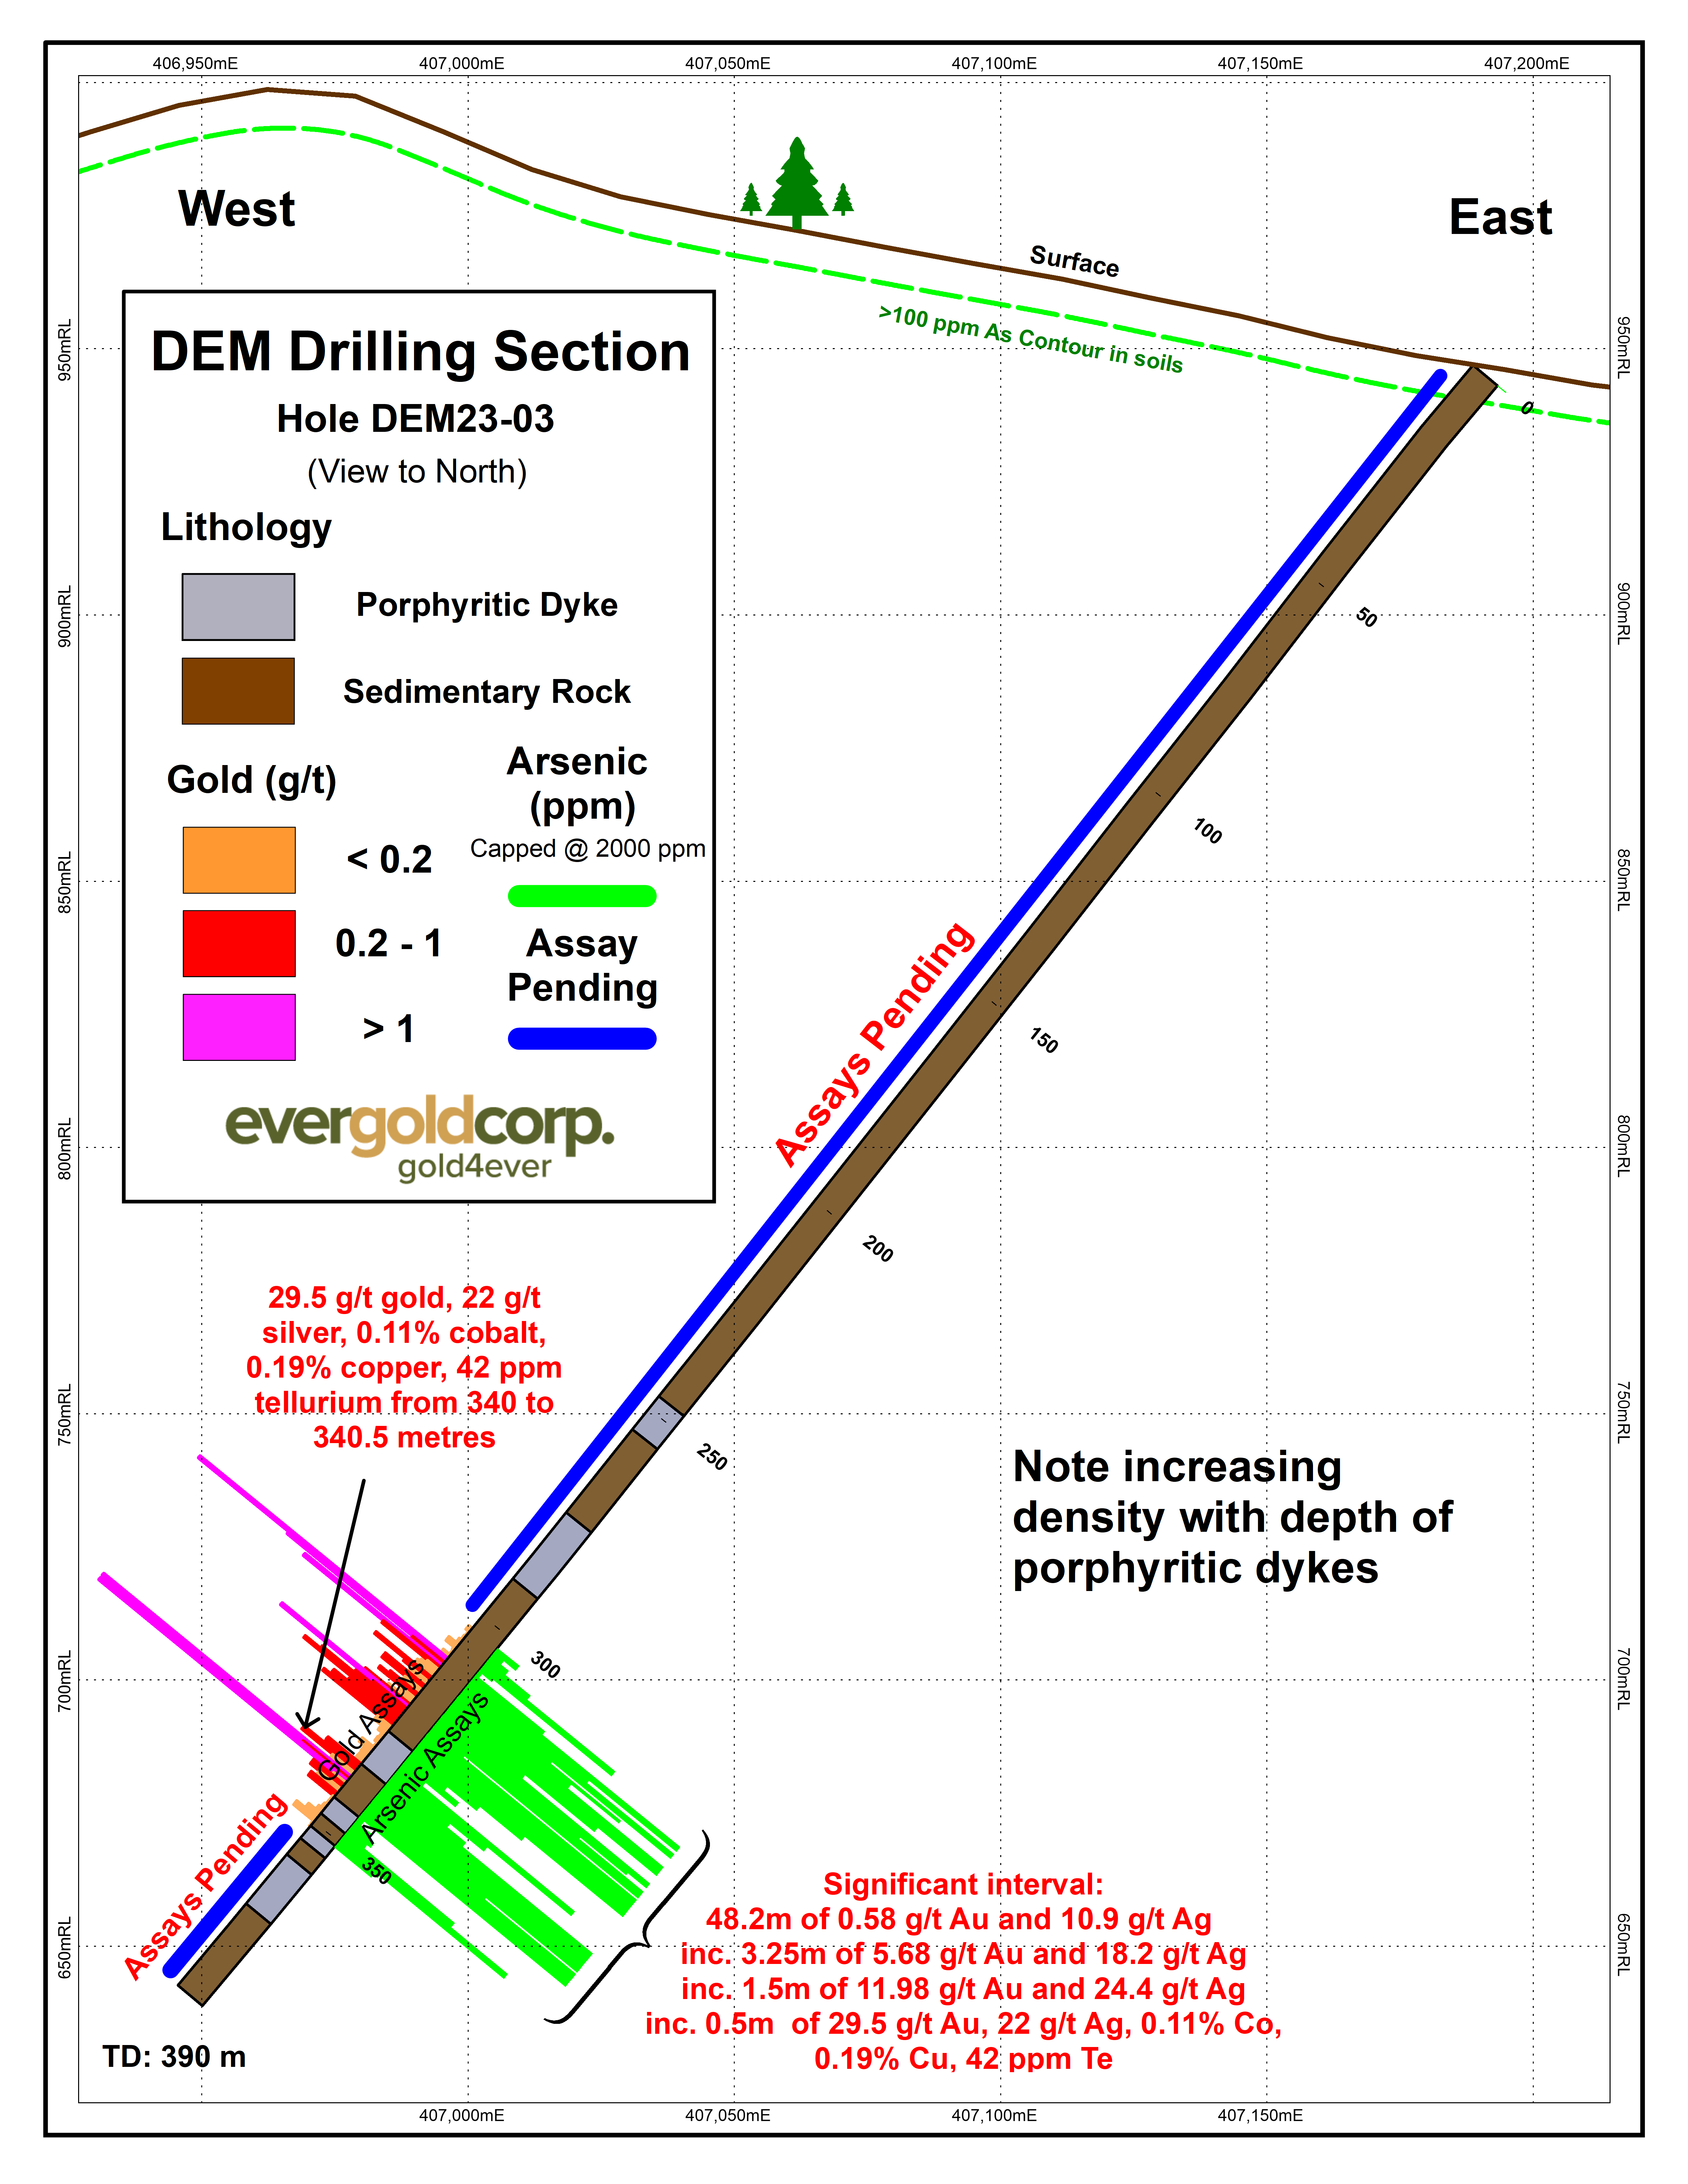 Figure 4 - DEM Drilling Section, Hole DEM23-03